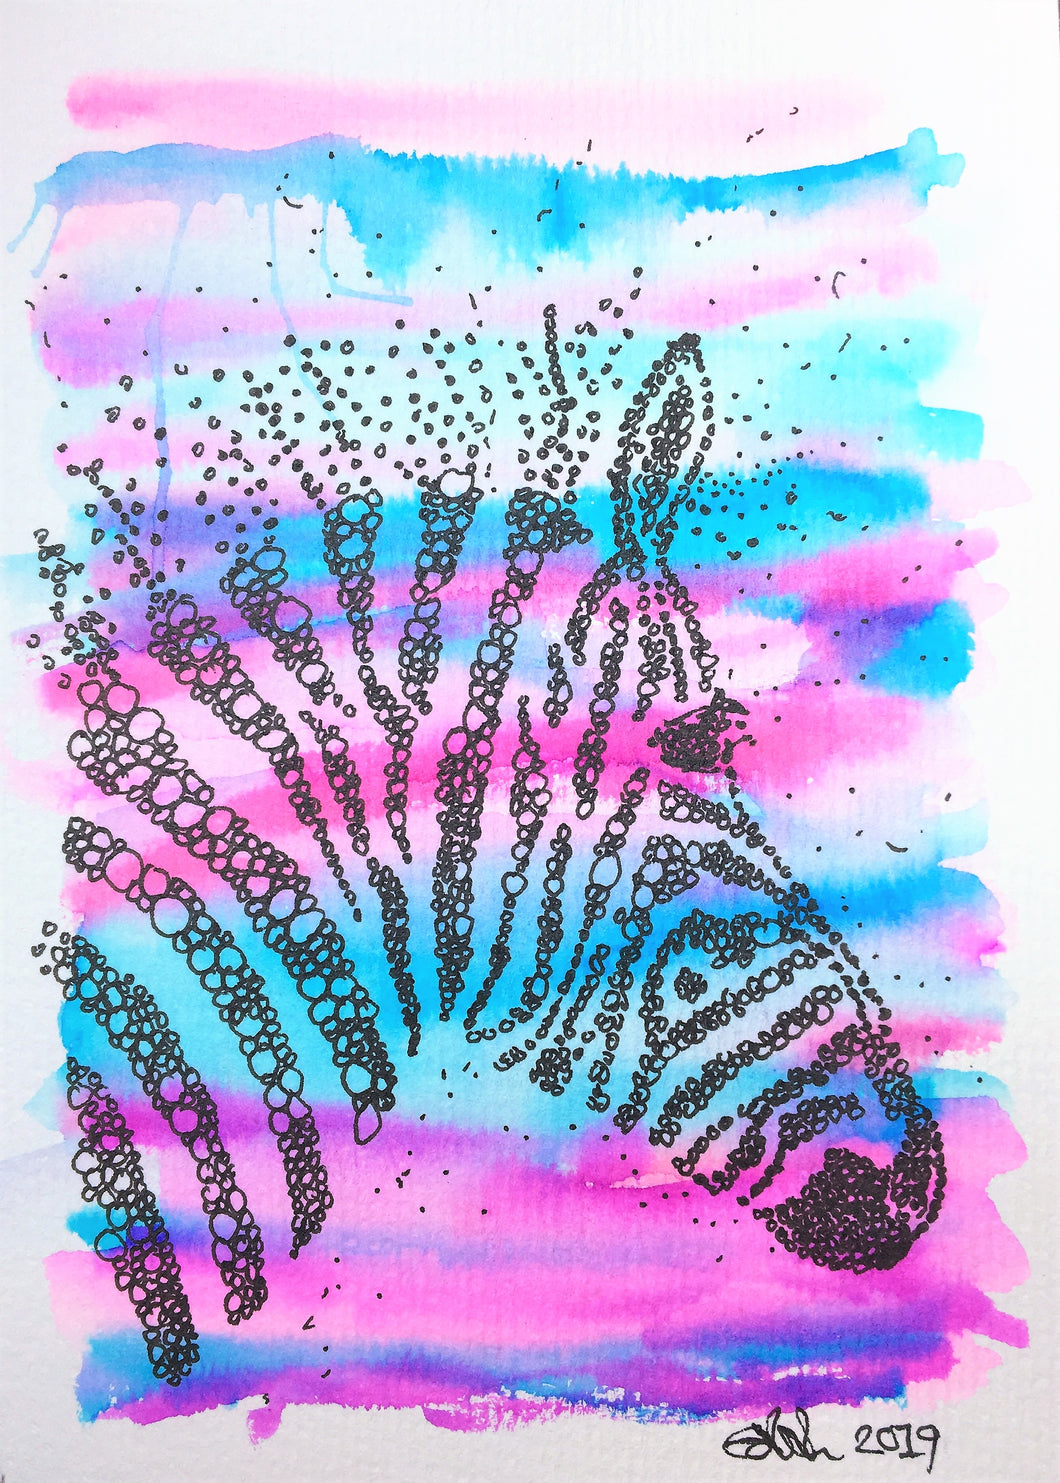 Handpainted Watercolour Greeting Card - Abstract Zebra Design - eDgE dEsiGn London